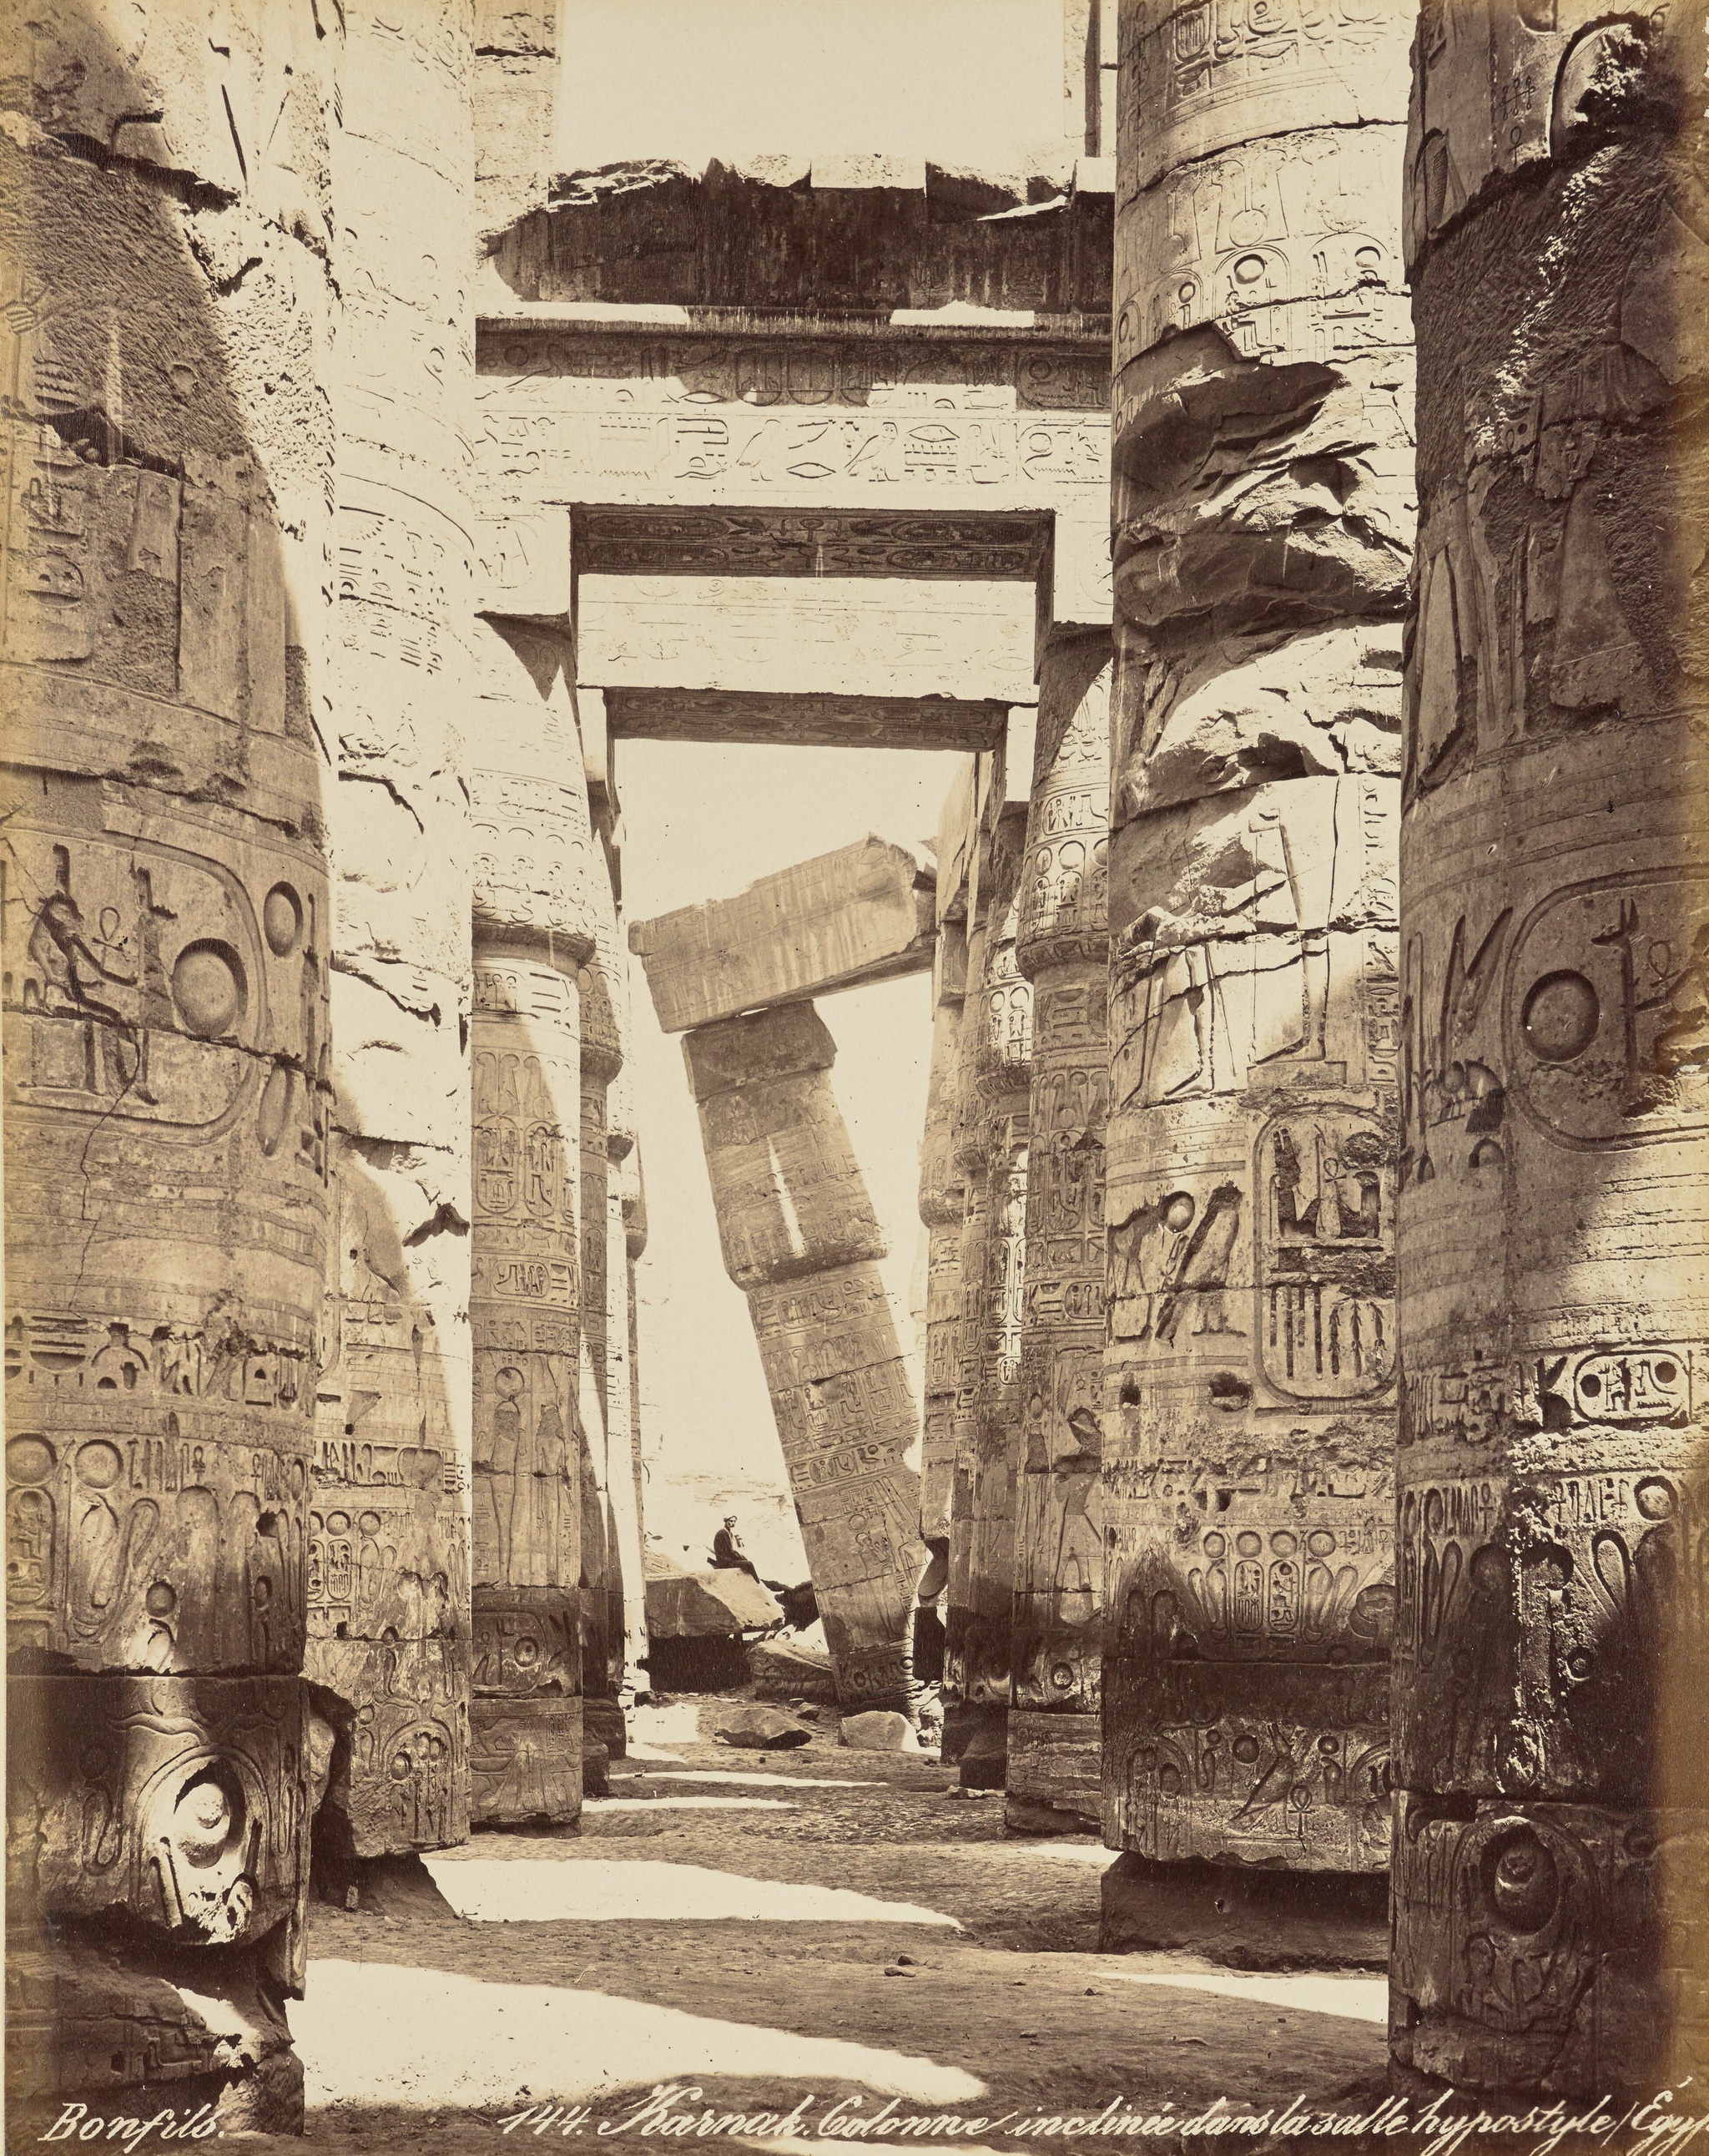 Egypt 1870s - Sciencepro, Egypt, Ancient Egypt, Informative, Temple, Historical photo, Black and white photo, Interesting, Old photo, Longpost